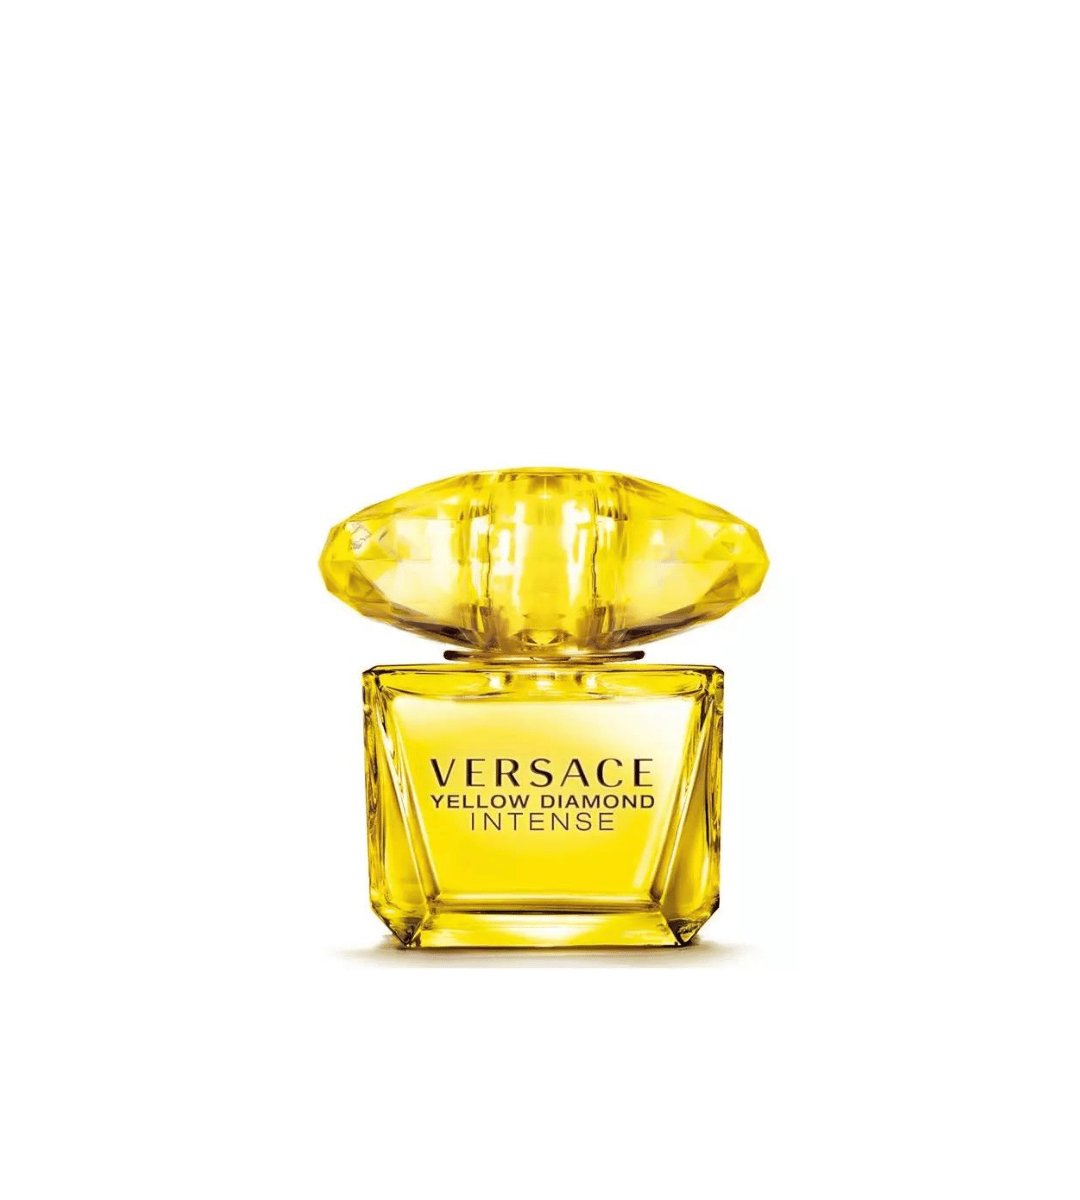 Versace YELLOW DIAMOND Eau Parfum INTENSE de